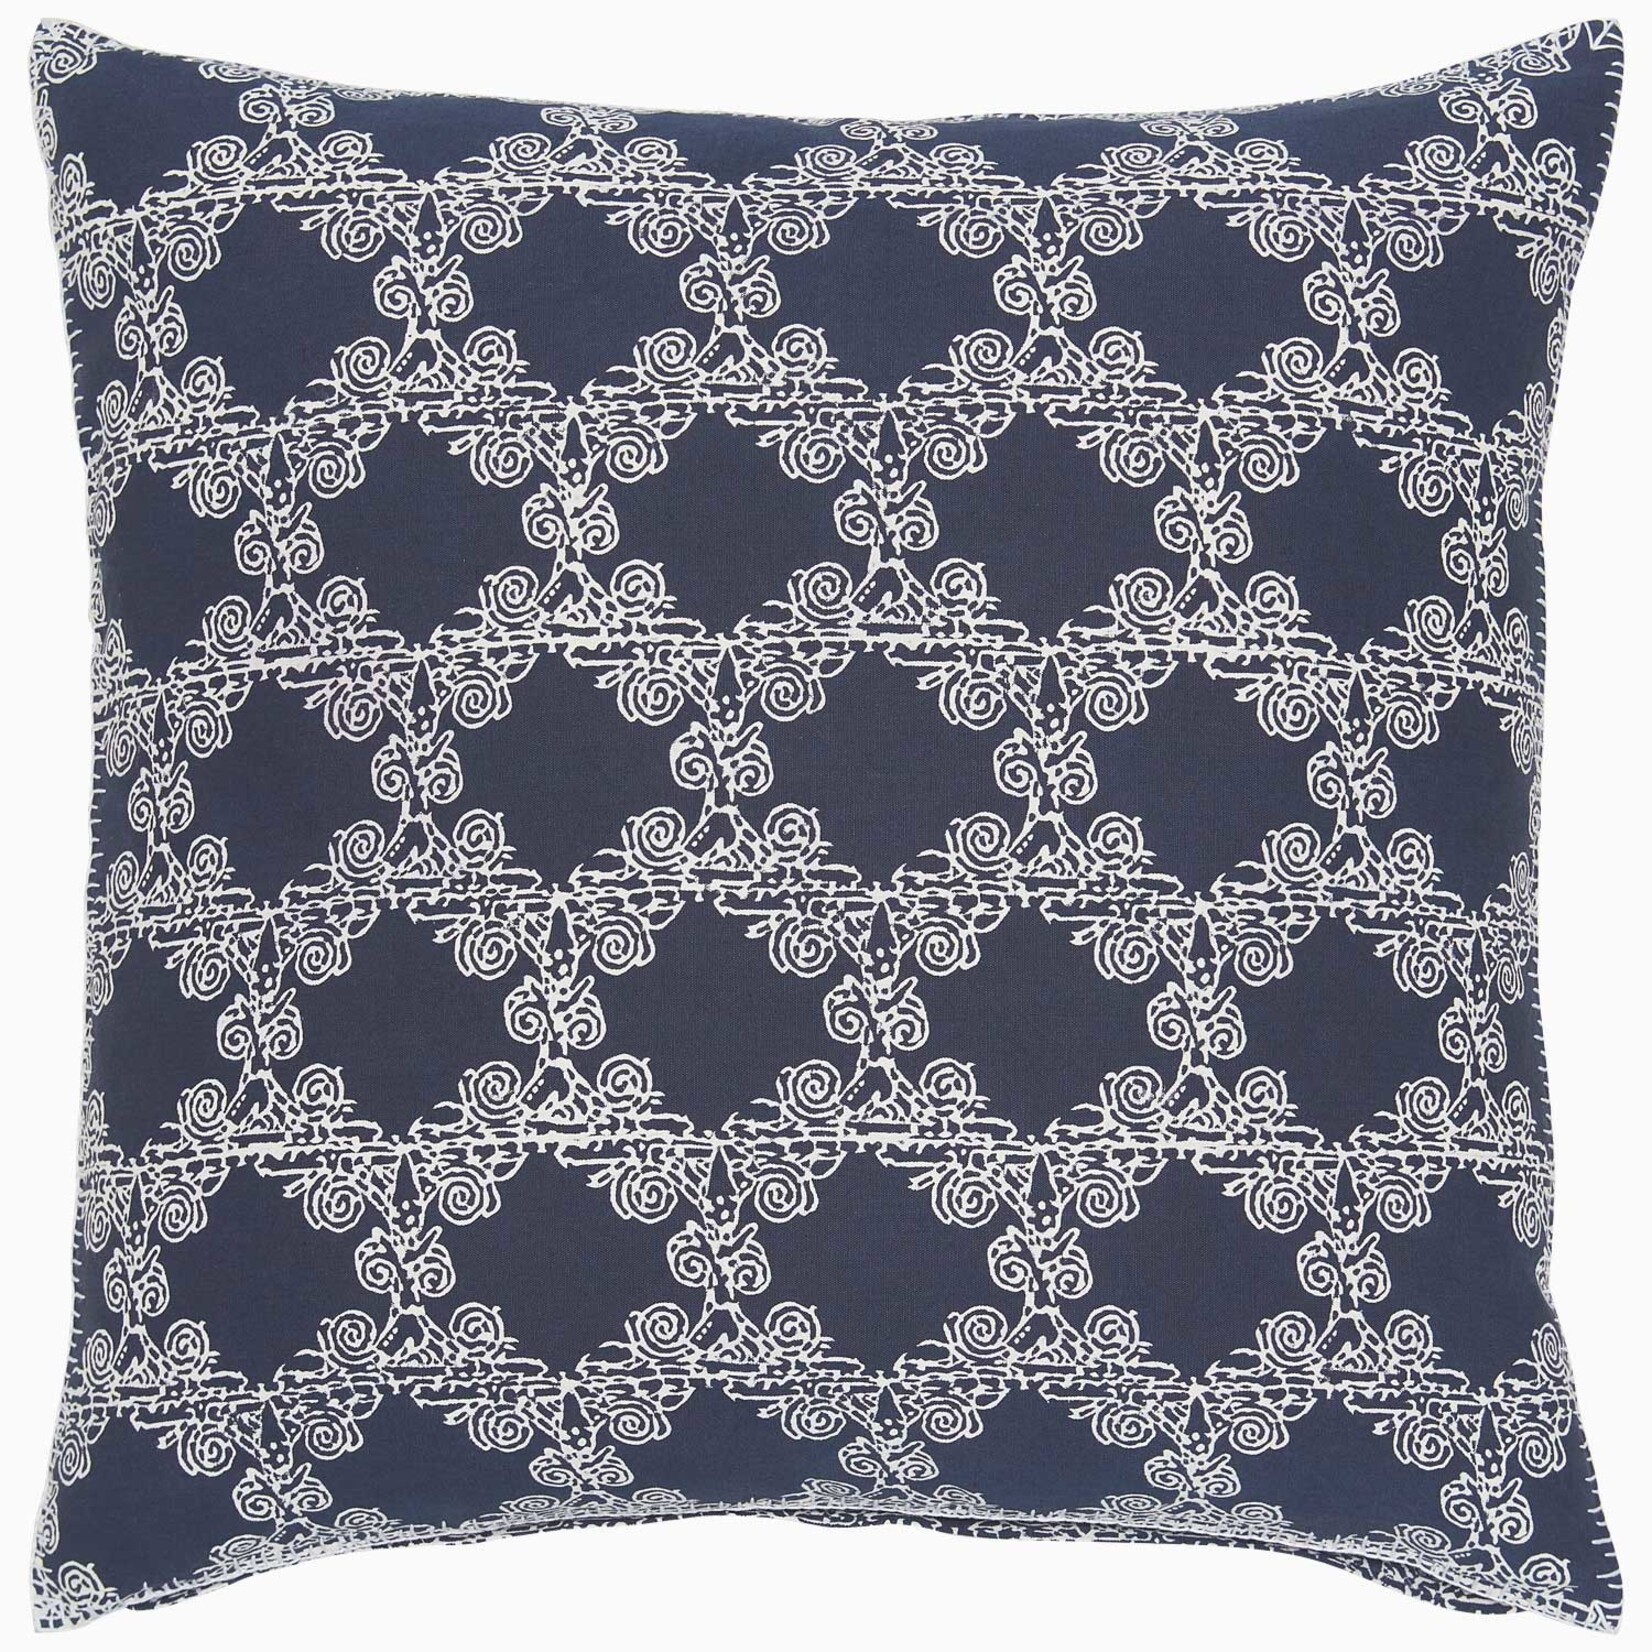 John Robshaw Textiles Upaya Decorative Pillow 22x22 with Feather Insert